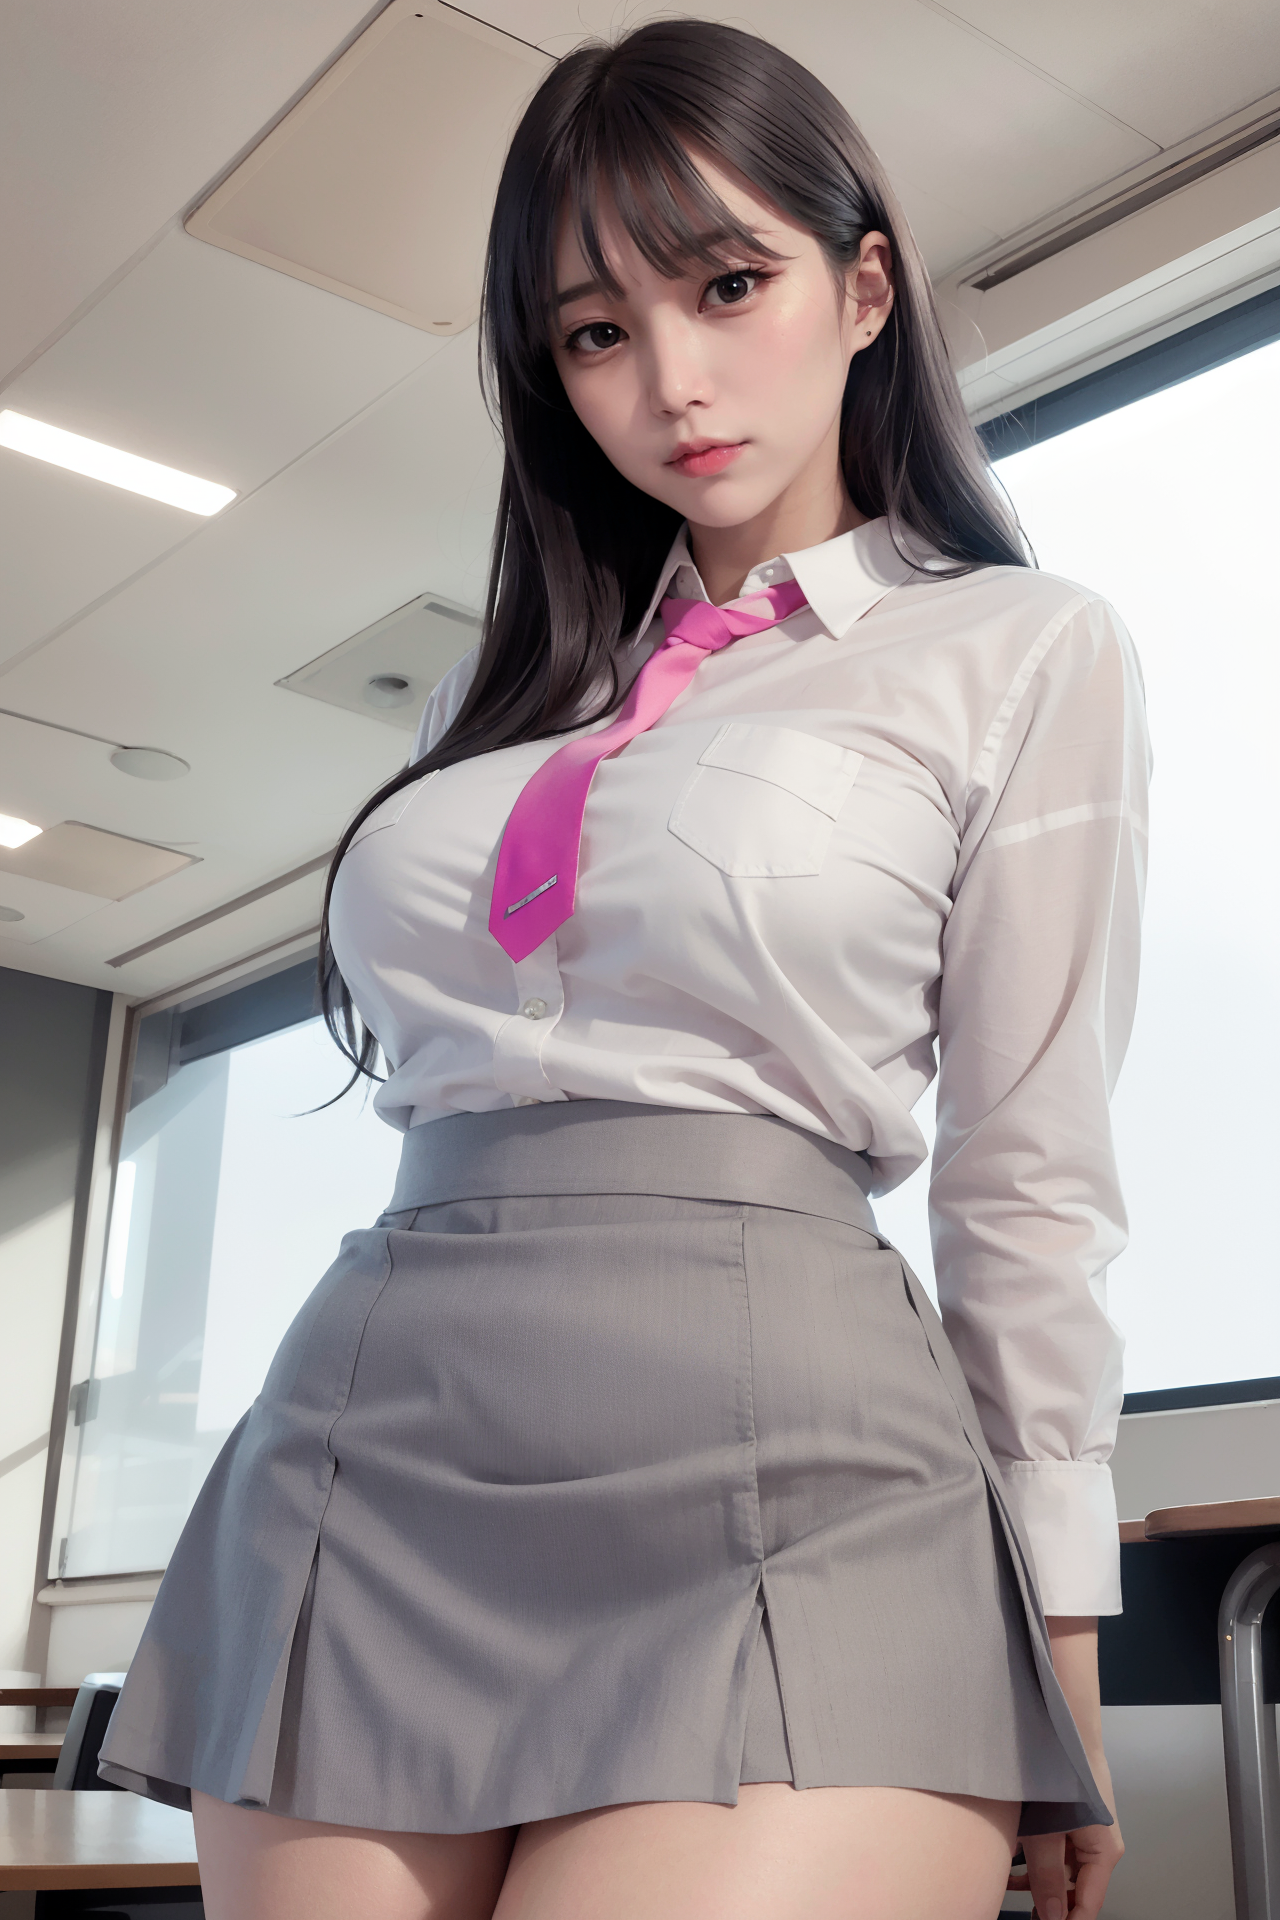 General 1280x1920 women Asian AI art Stable Diffusion brunette school uniform shirt miniskirt classroom SanKo tie portrait display schoolgirl looking at viewer